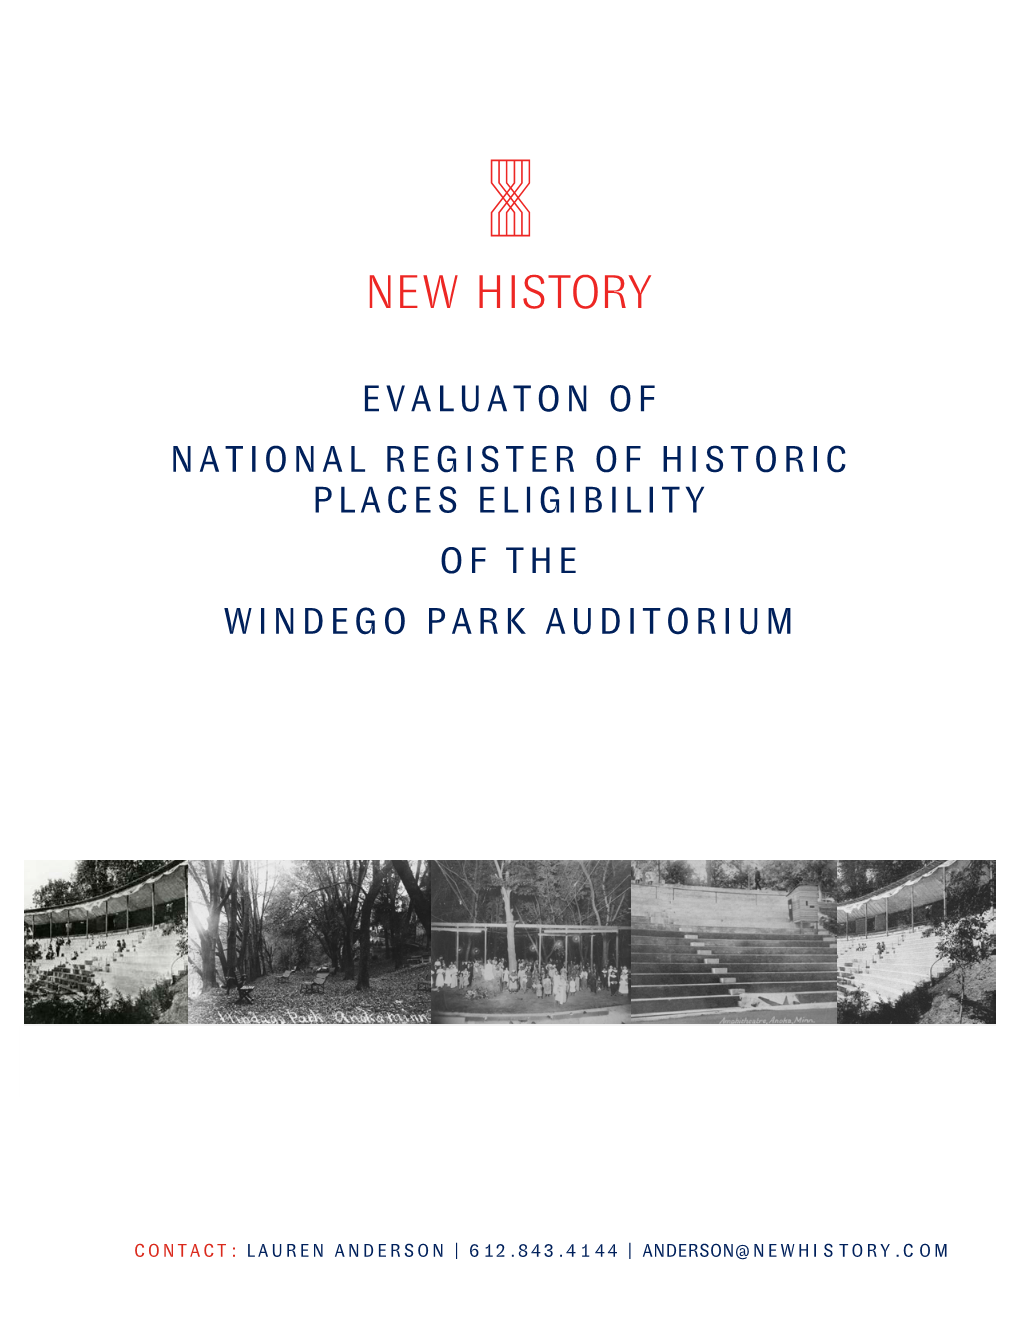 Evaluaton of National Register of Historic Places Eligibility of the Windego Park Auditorium